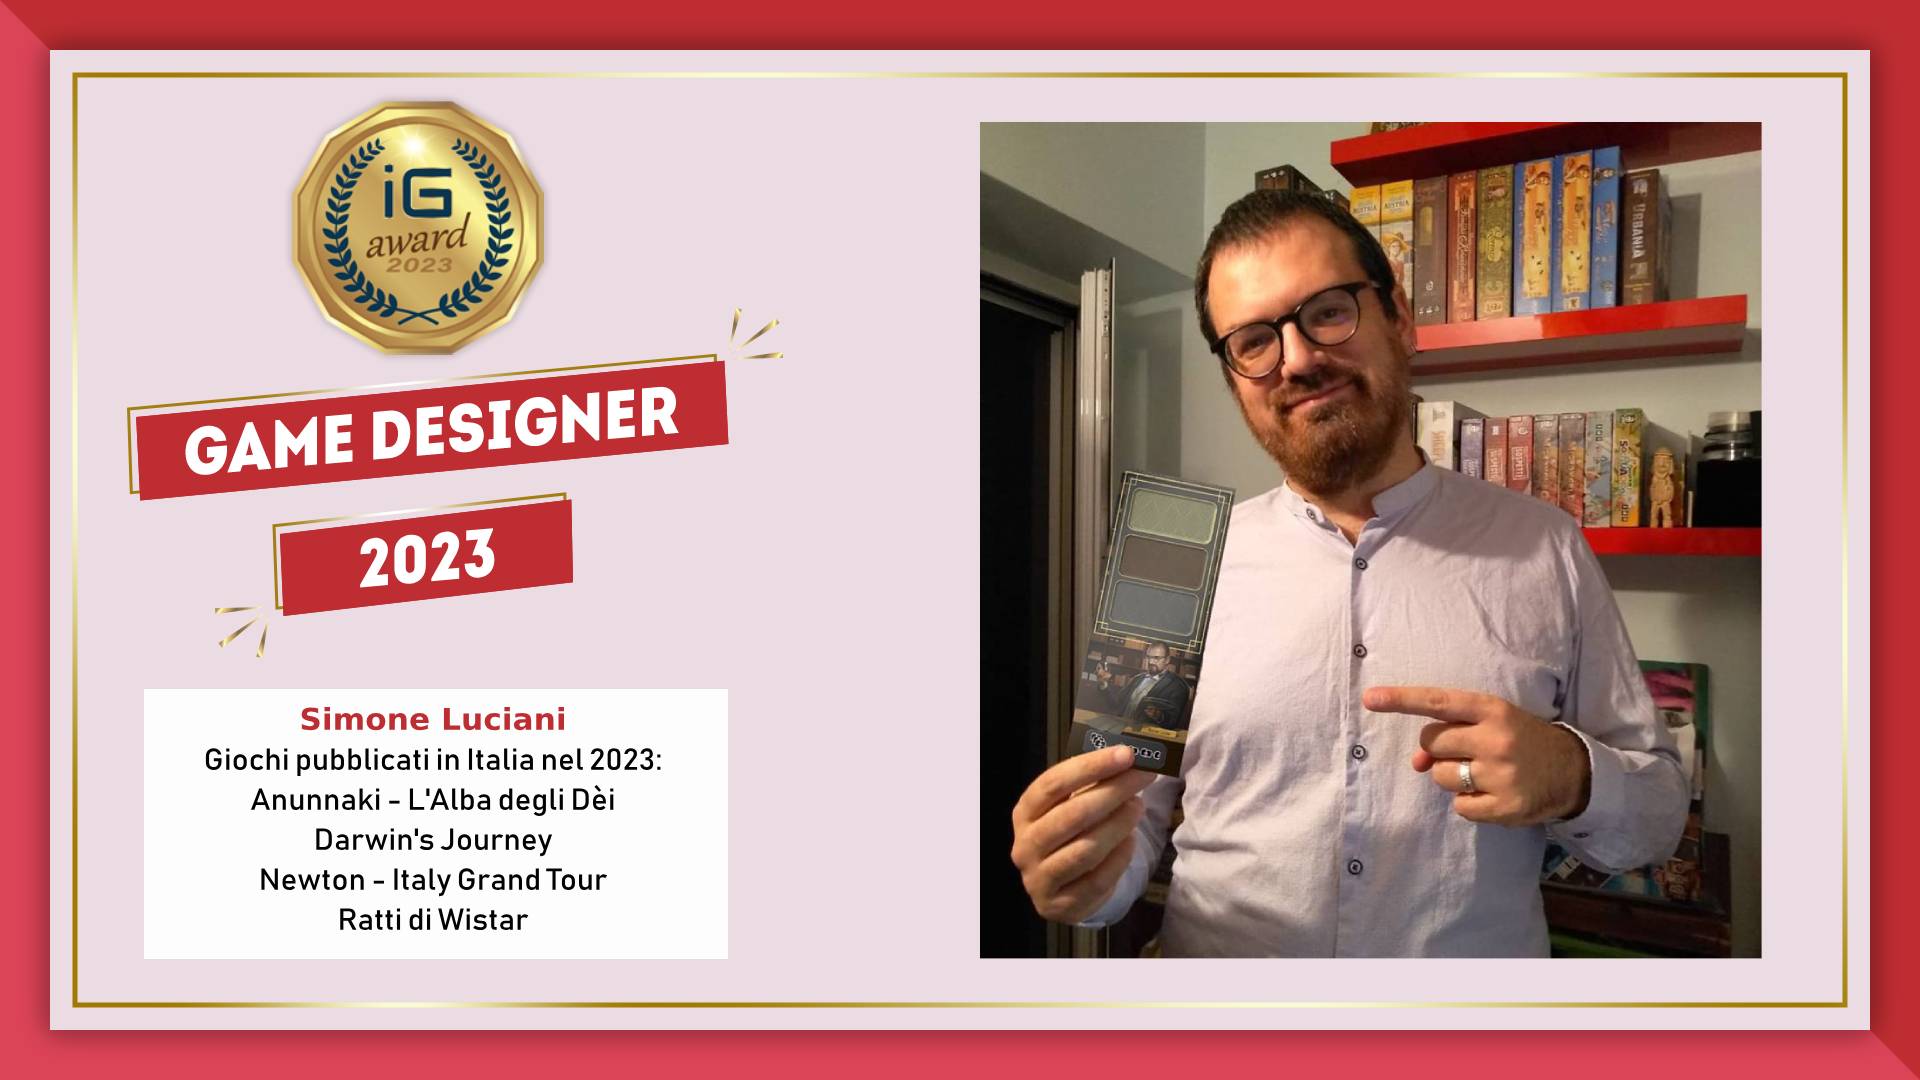 ioGioco Award 2023 - Game Designer